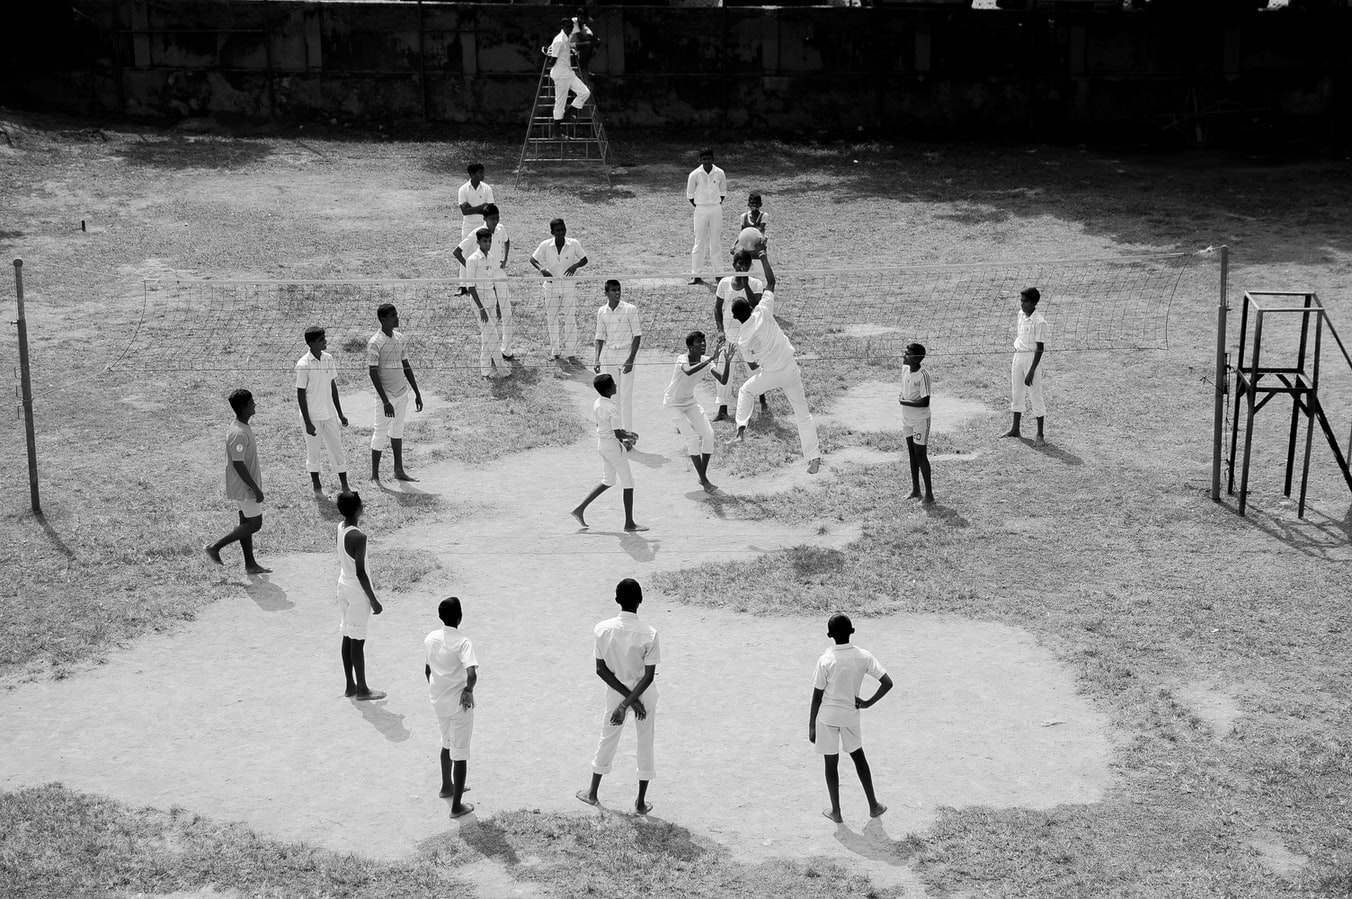 Sri lanka-Cricket-Sports